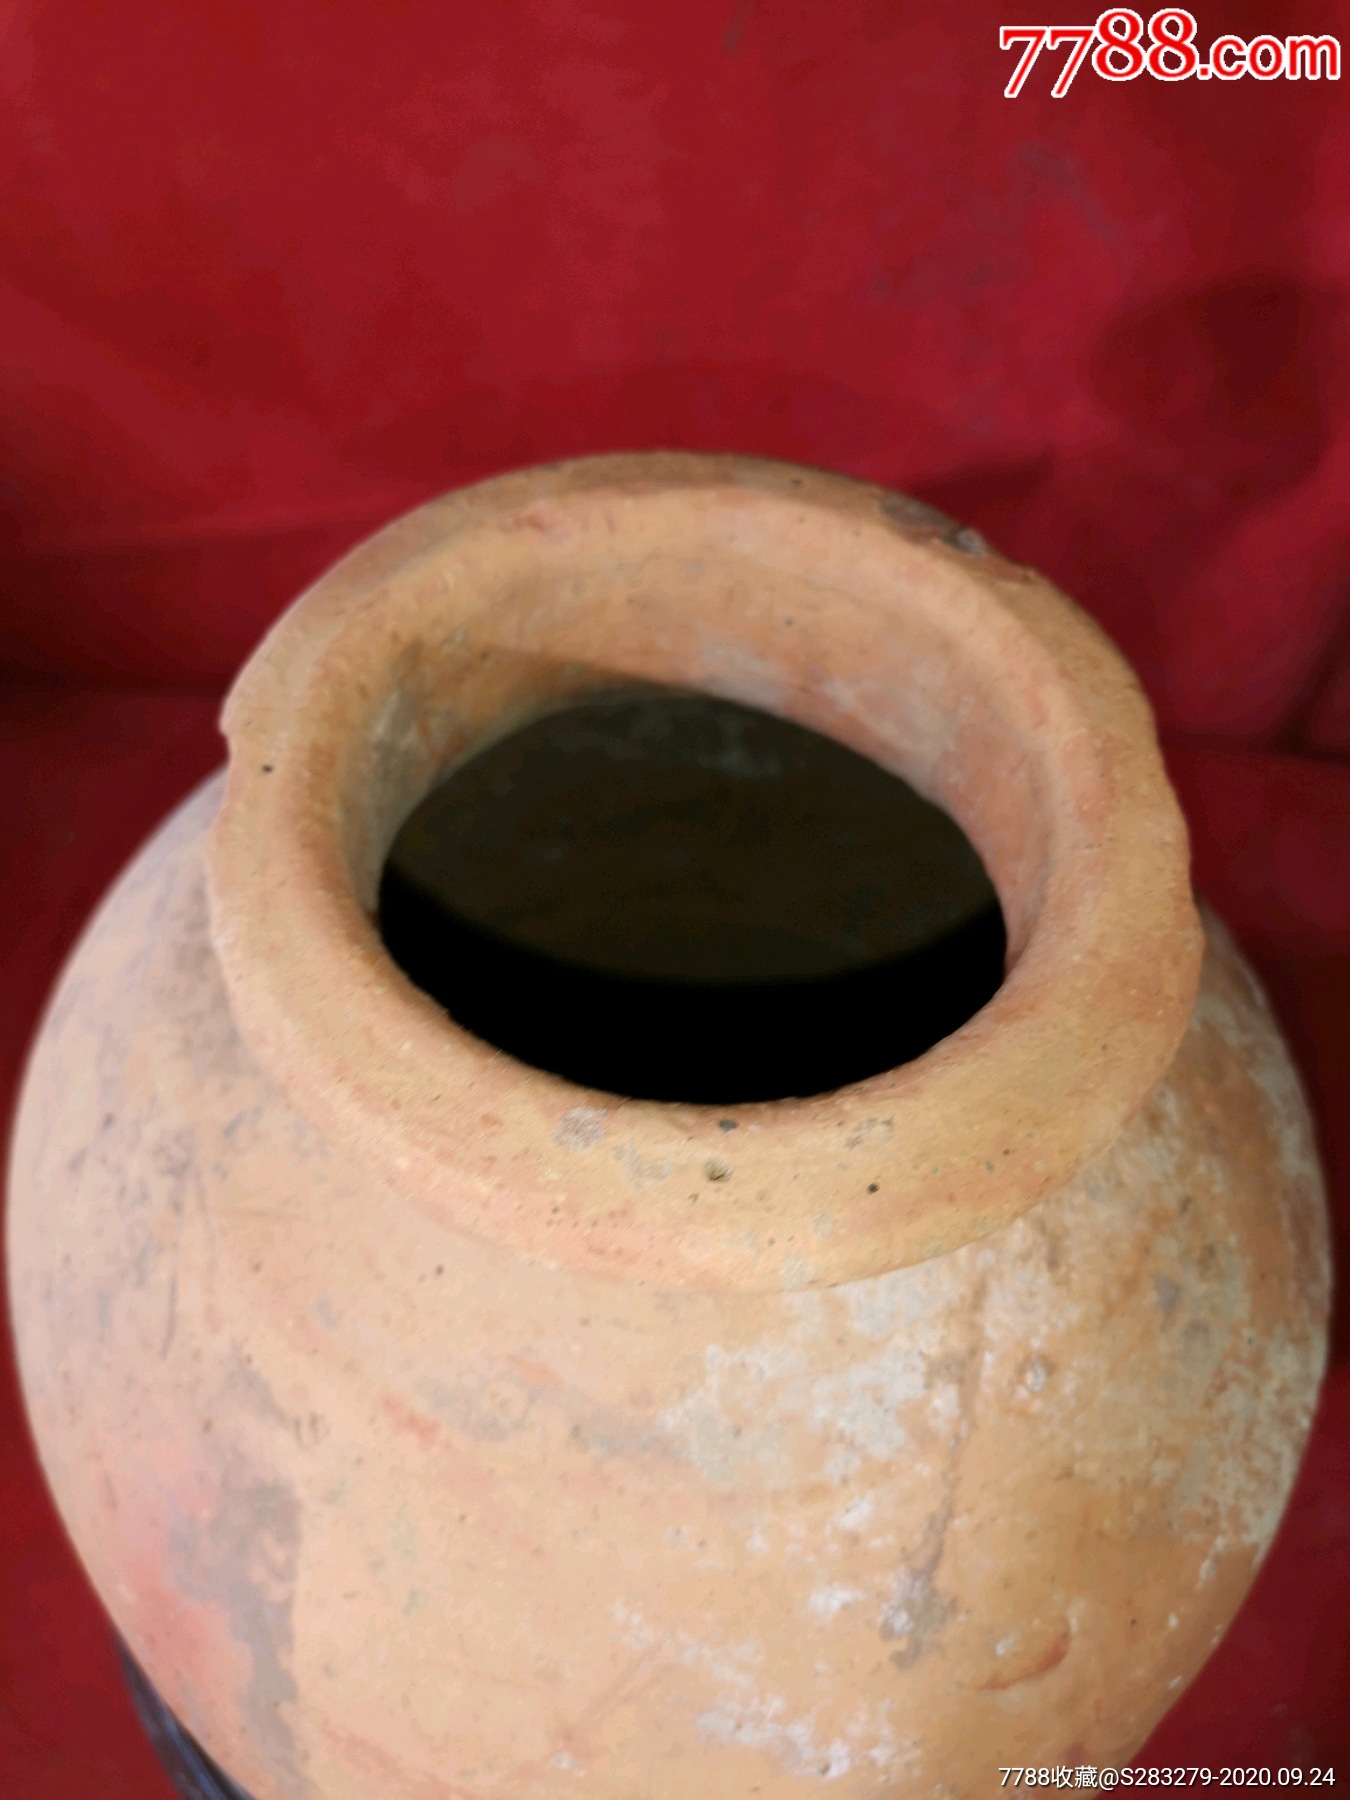 唐代红陶罐图片